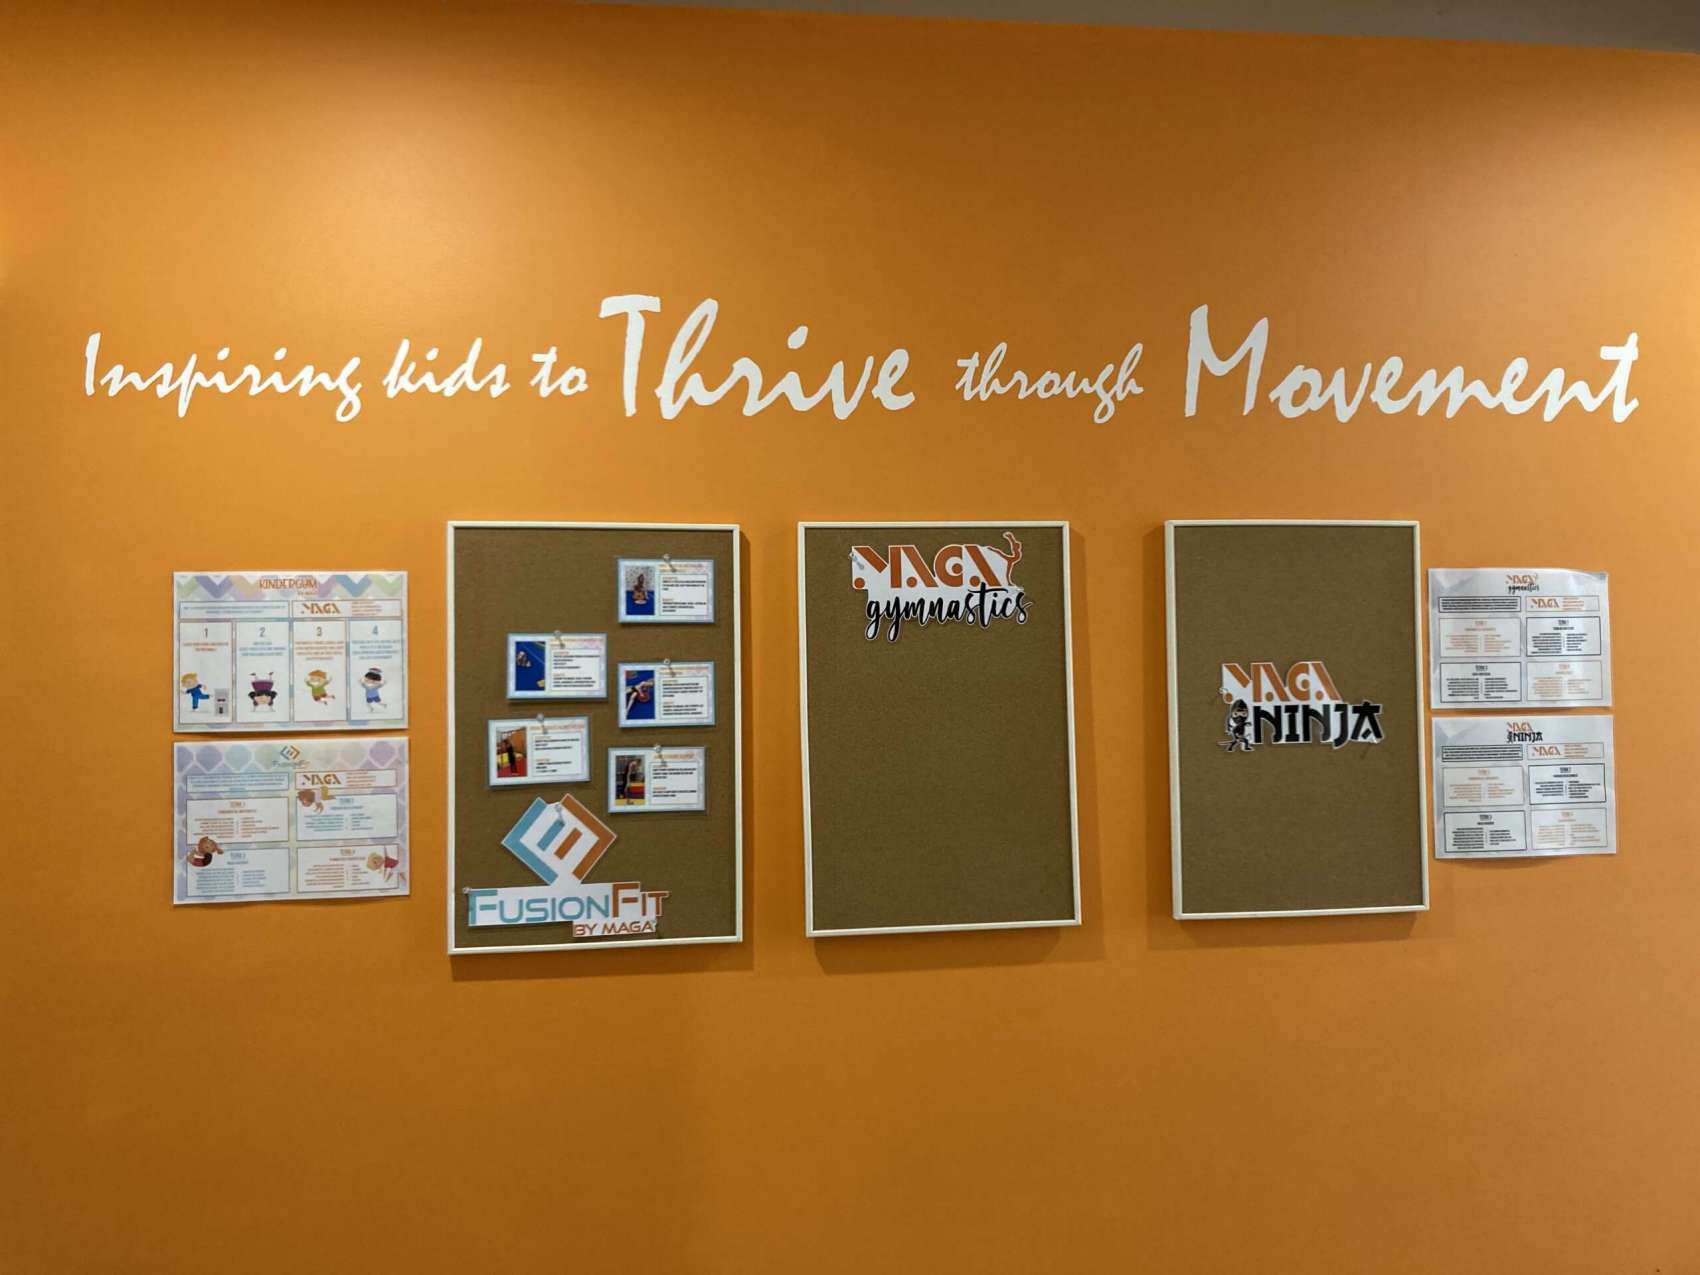 Maga Communication Wall Inspiring kids to THRIVE through Movement